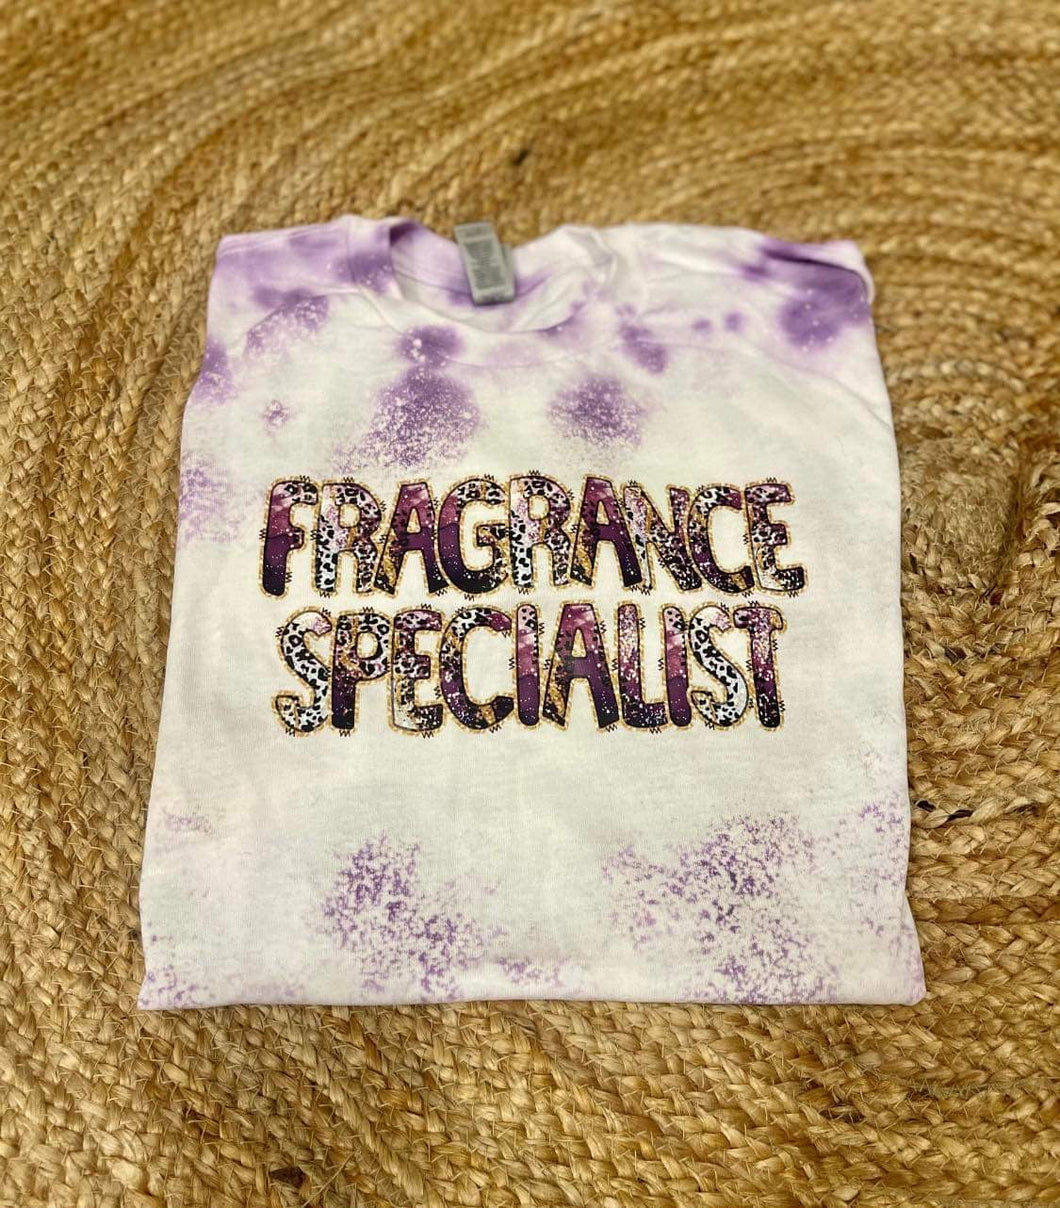 Fragrance specialist purple